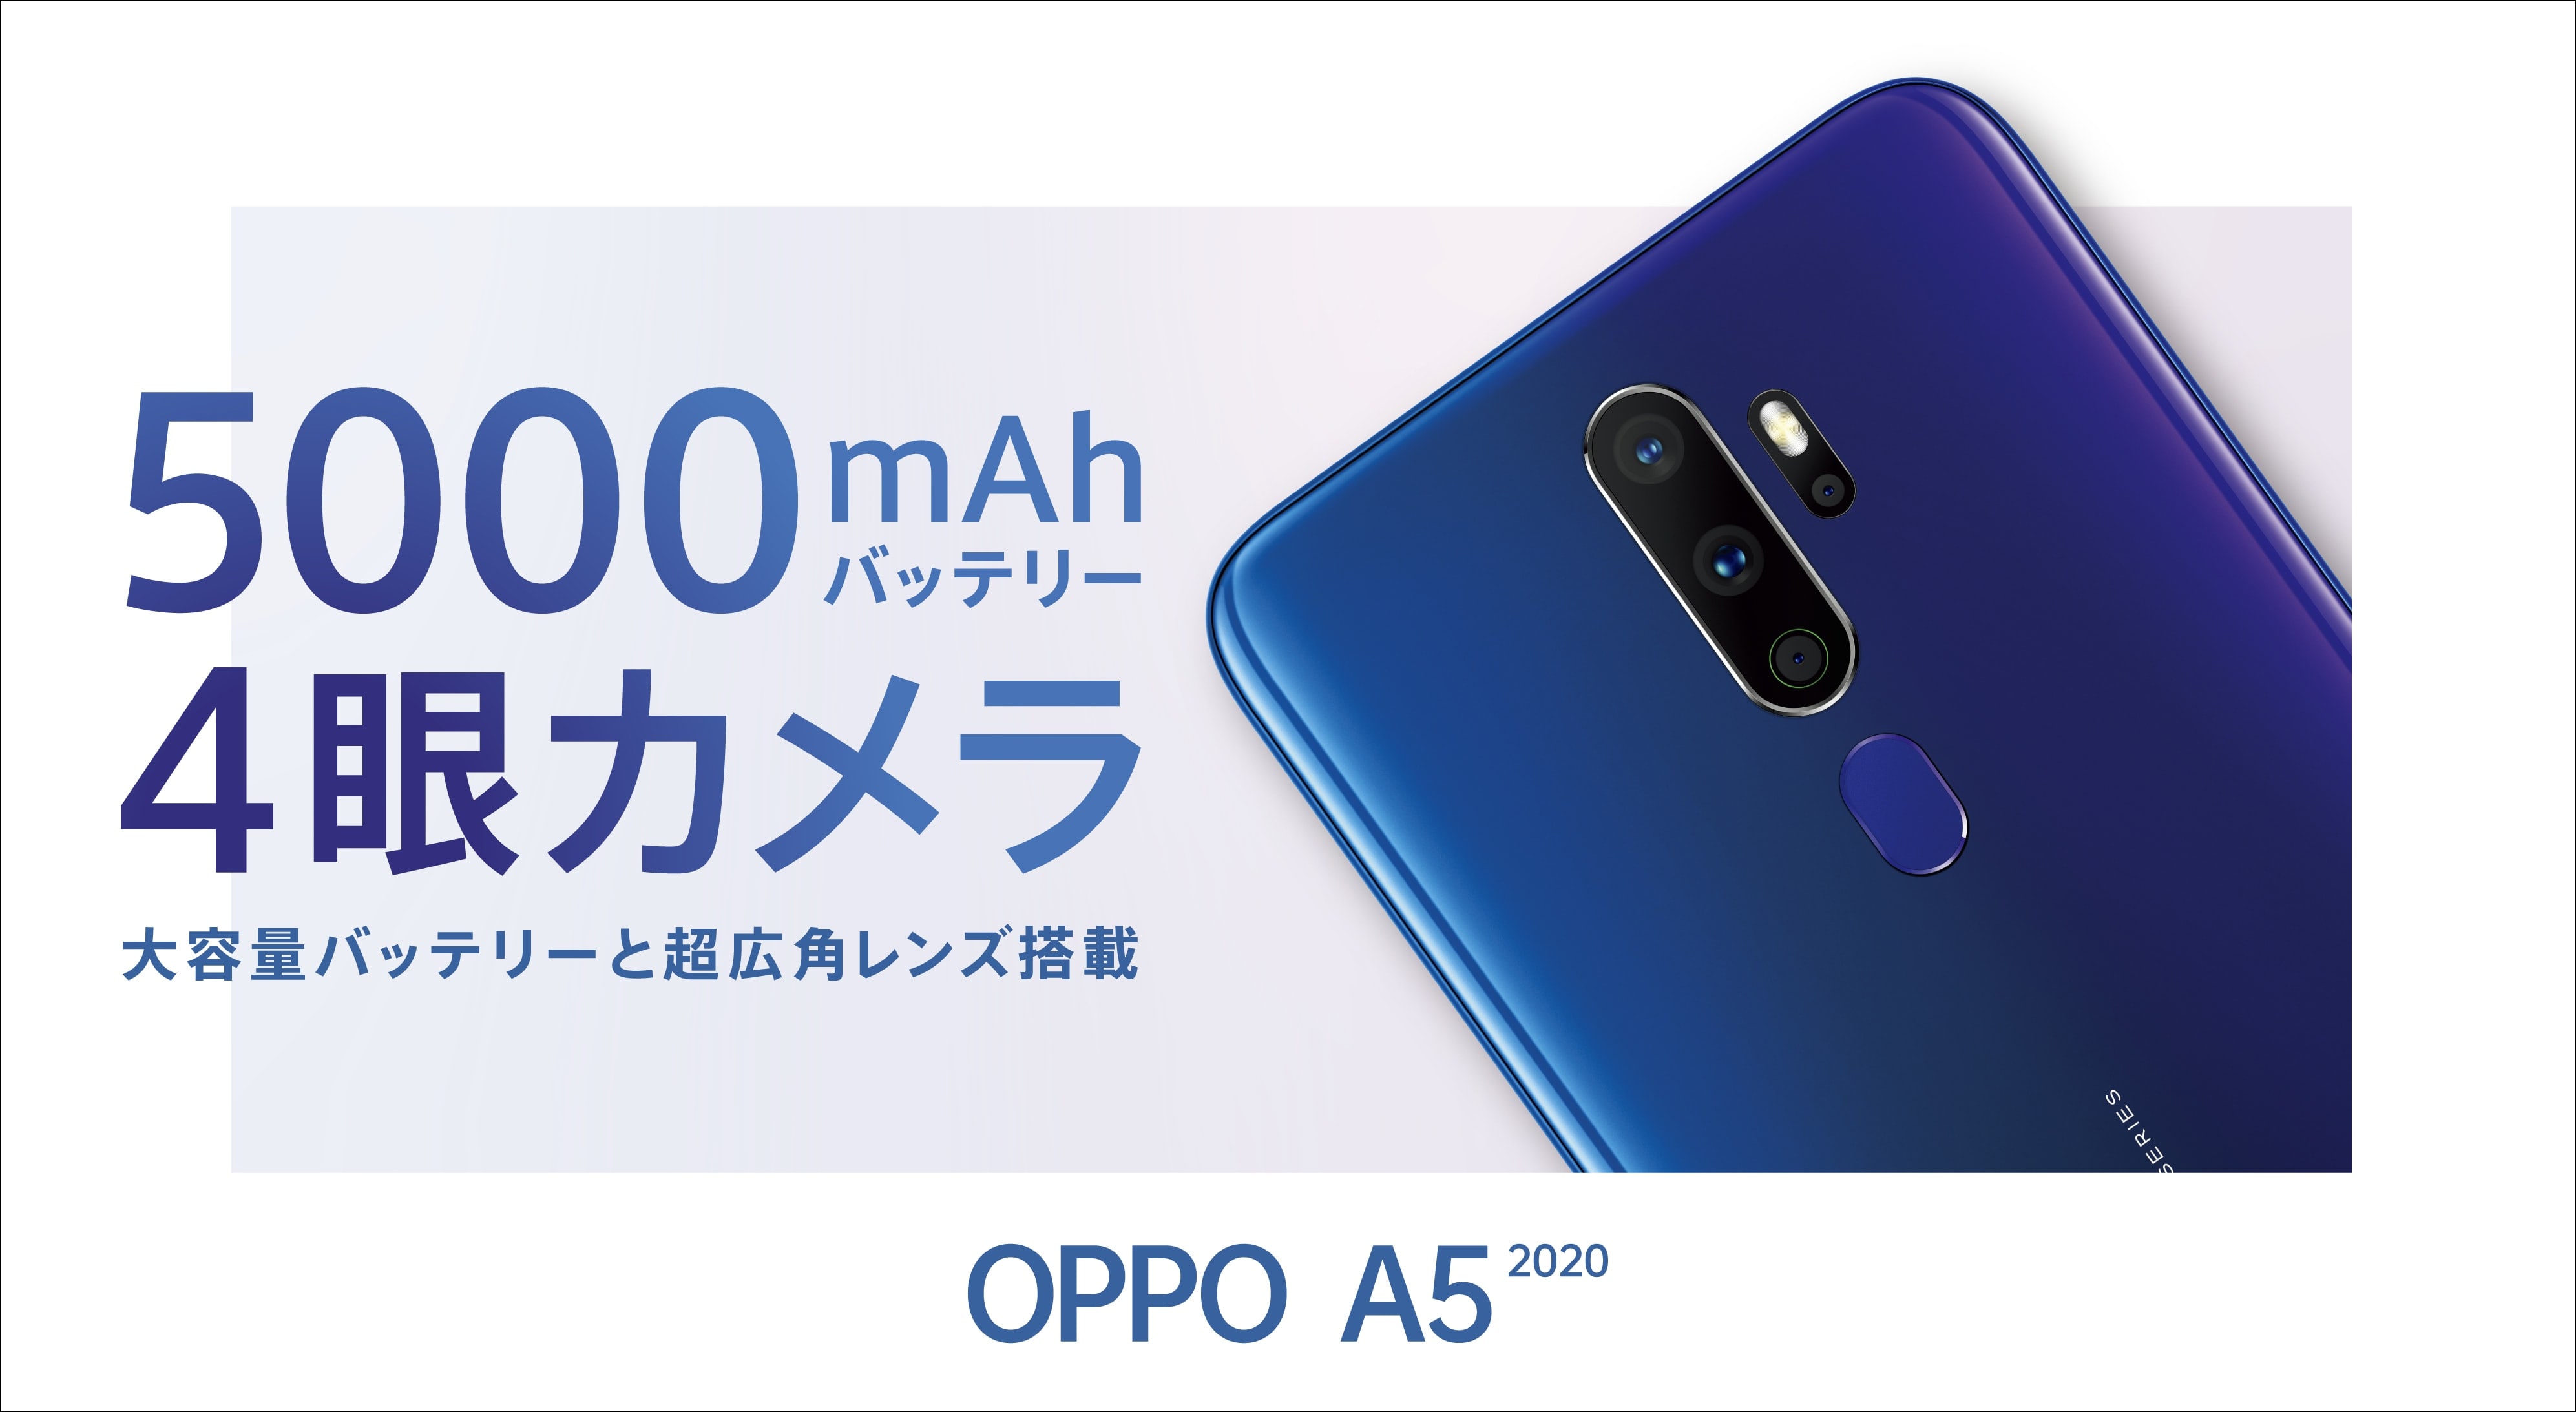 SIMフリースマートフォン「OPPO A5 2020」を発表 | オウガ・ジャパン